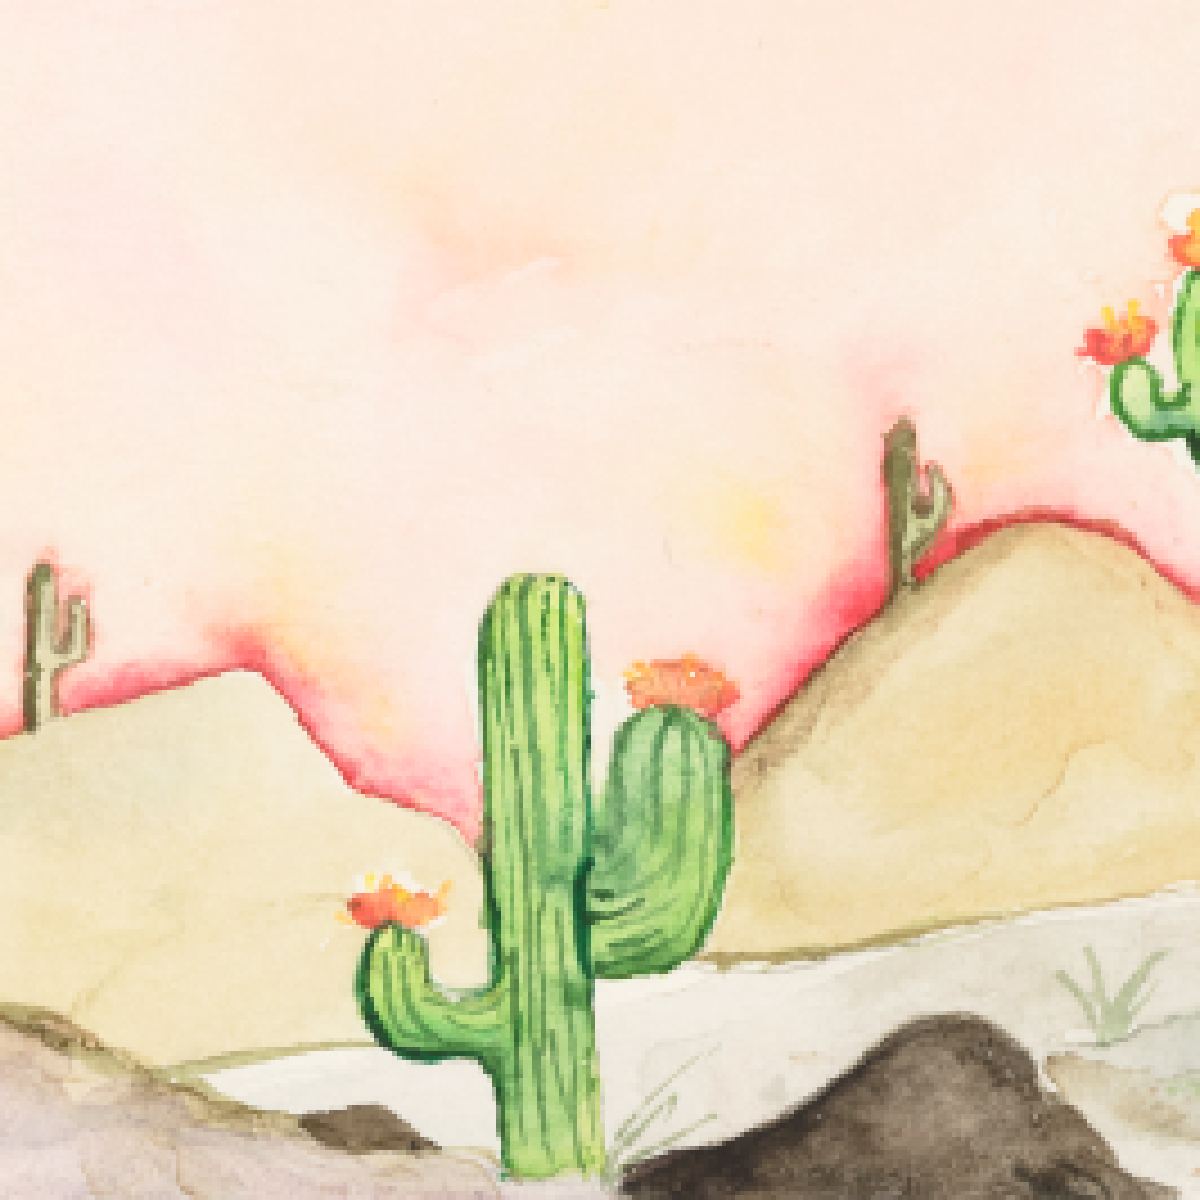 cactus under pink sky - original artwork